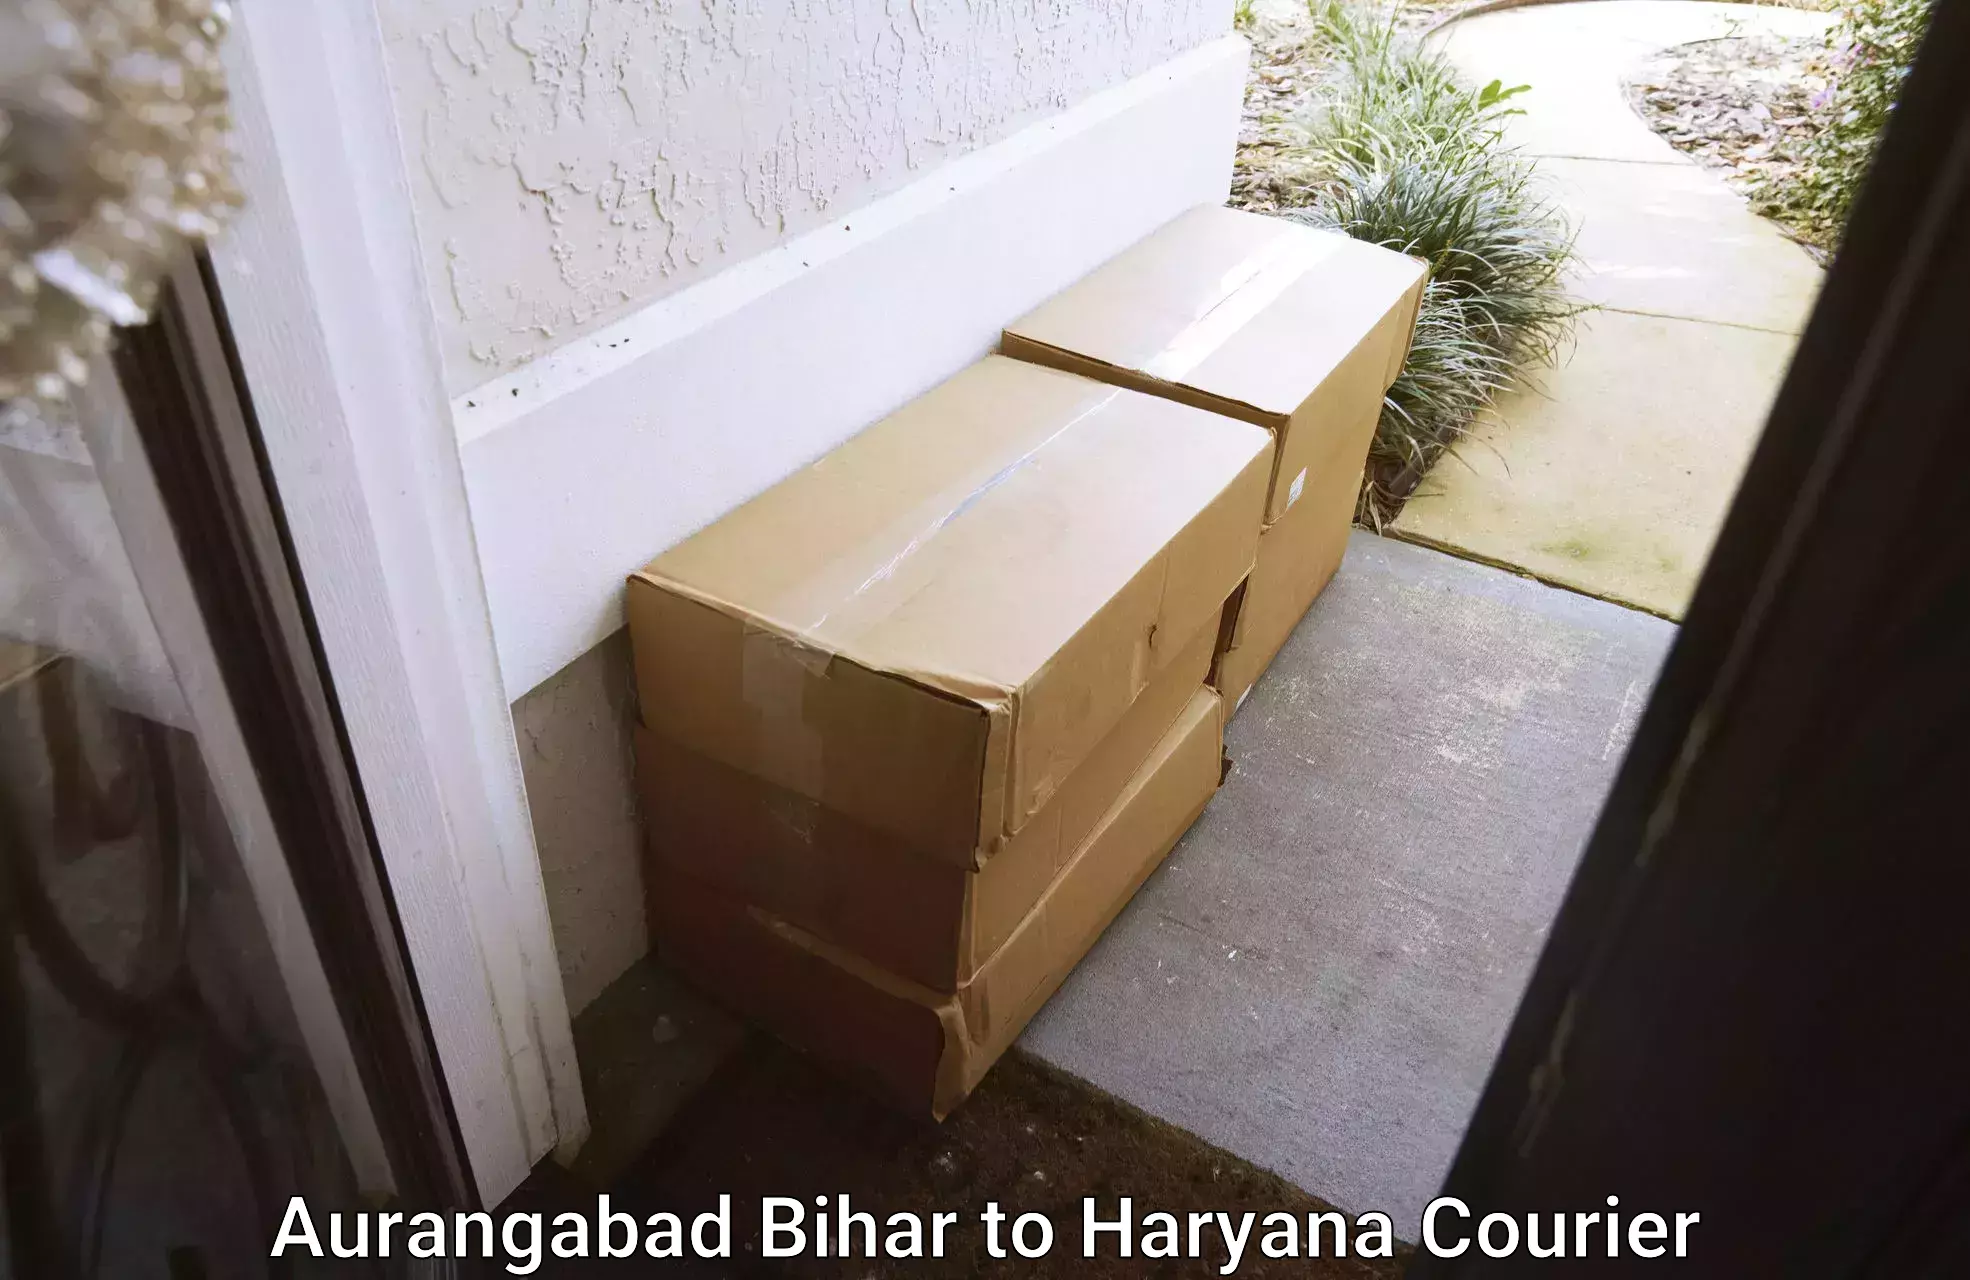 Quality moving company Aurangabad Bihar to Rohtak